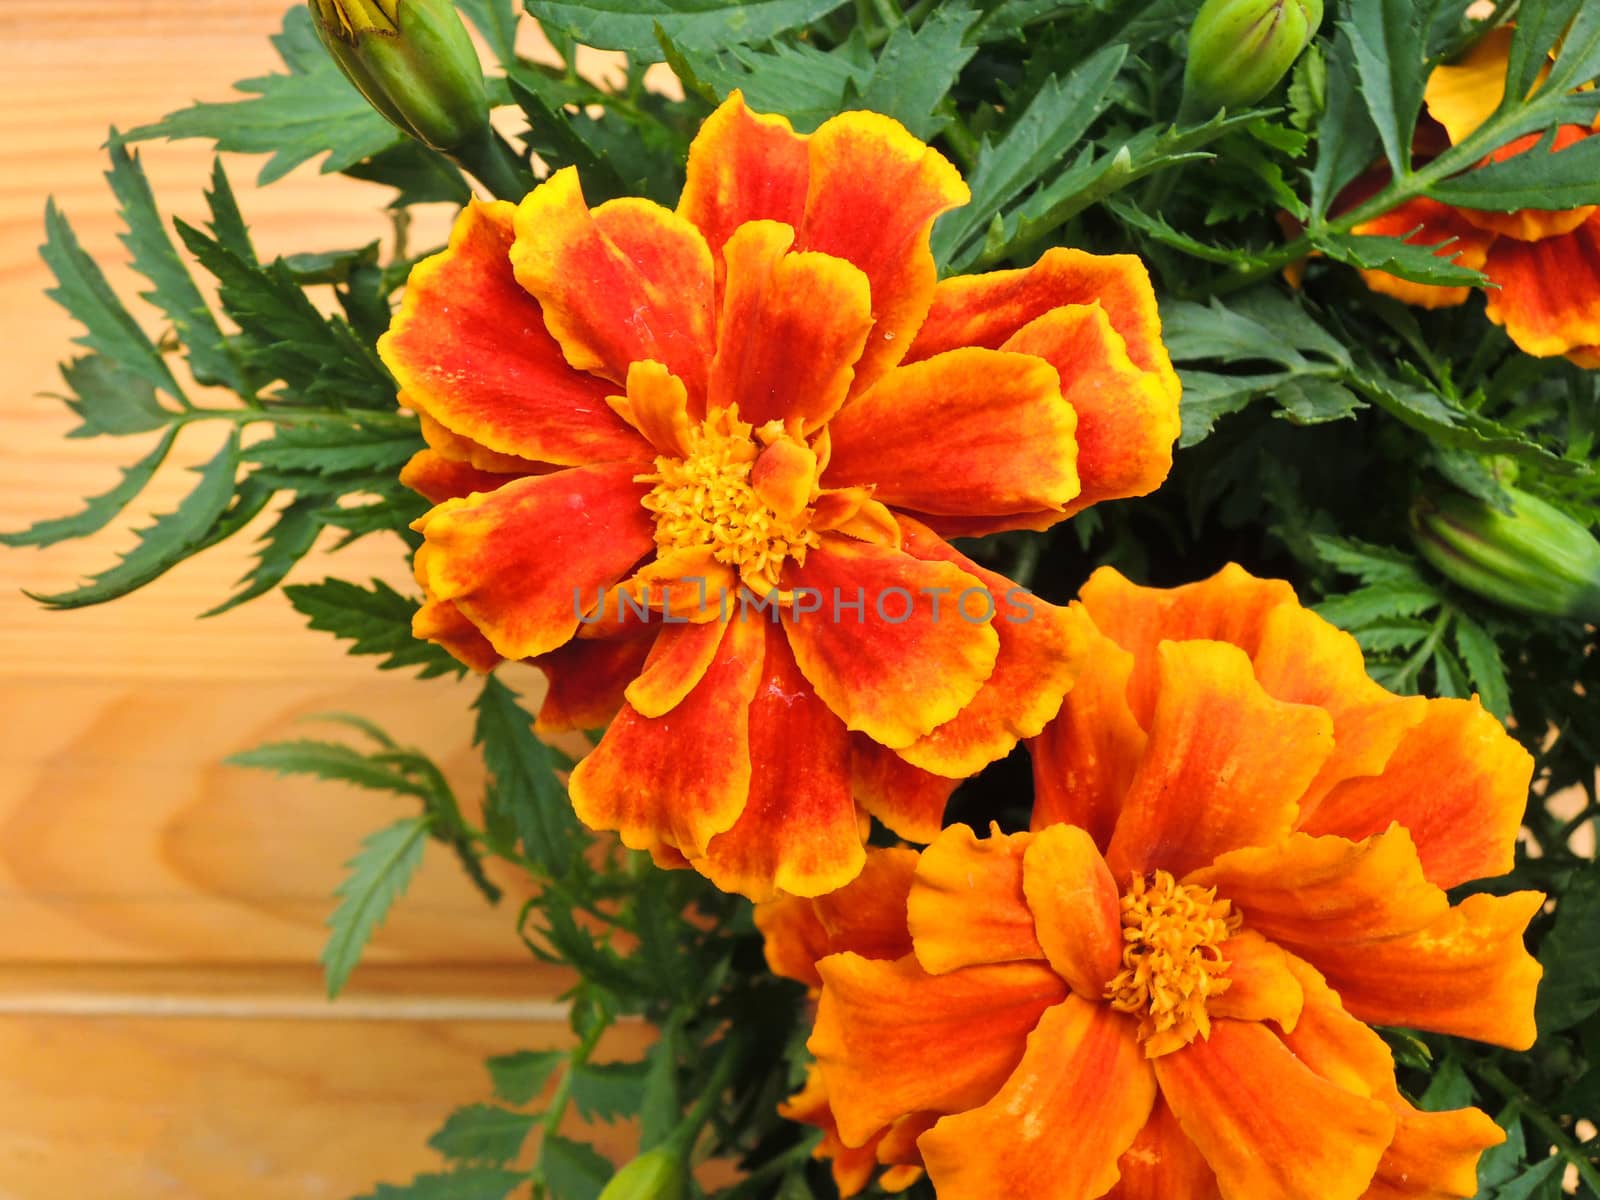 Marigold flower on wooden background by MalyDesigner